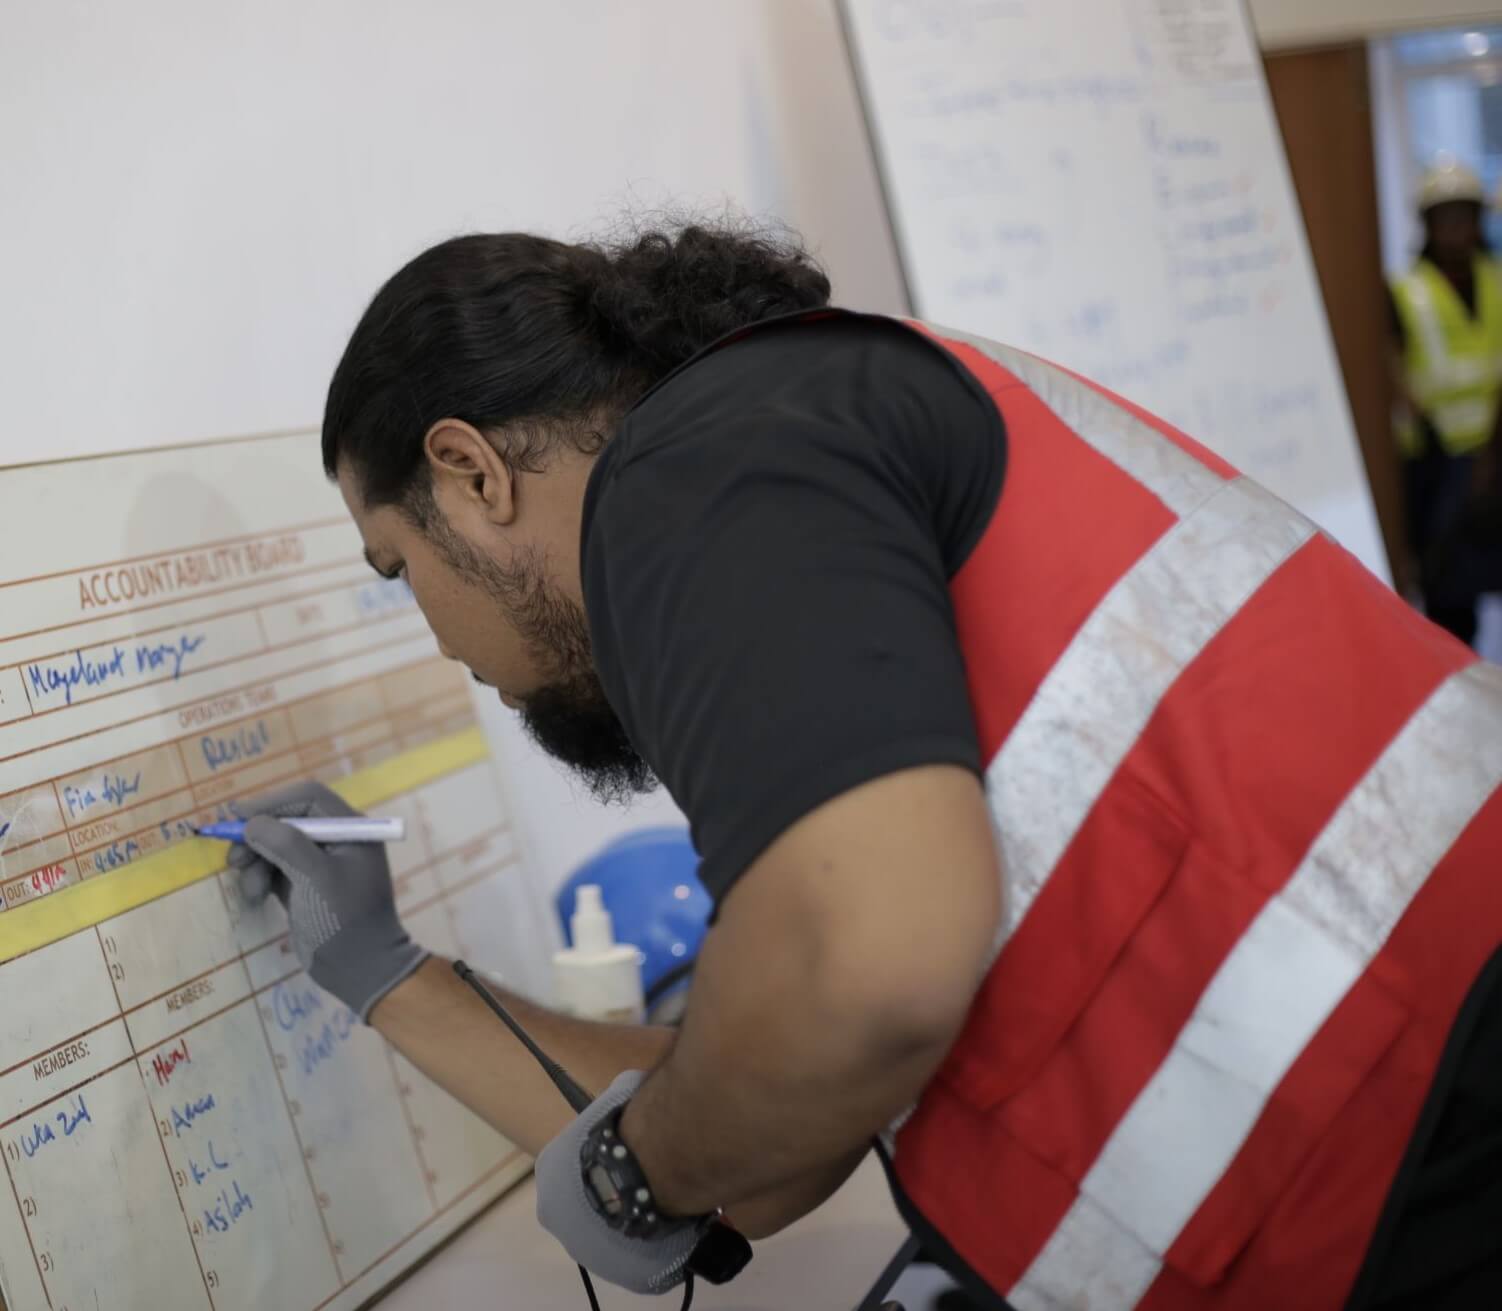 Emergency response planning training at ASEC